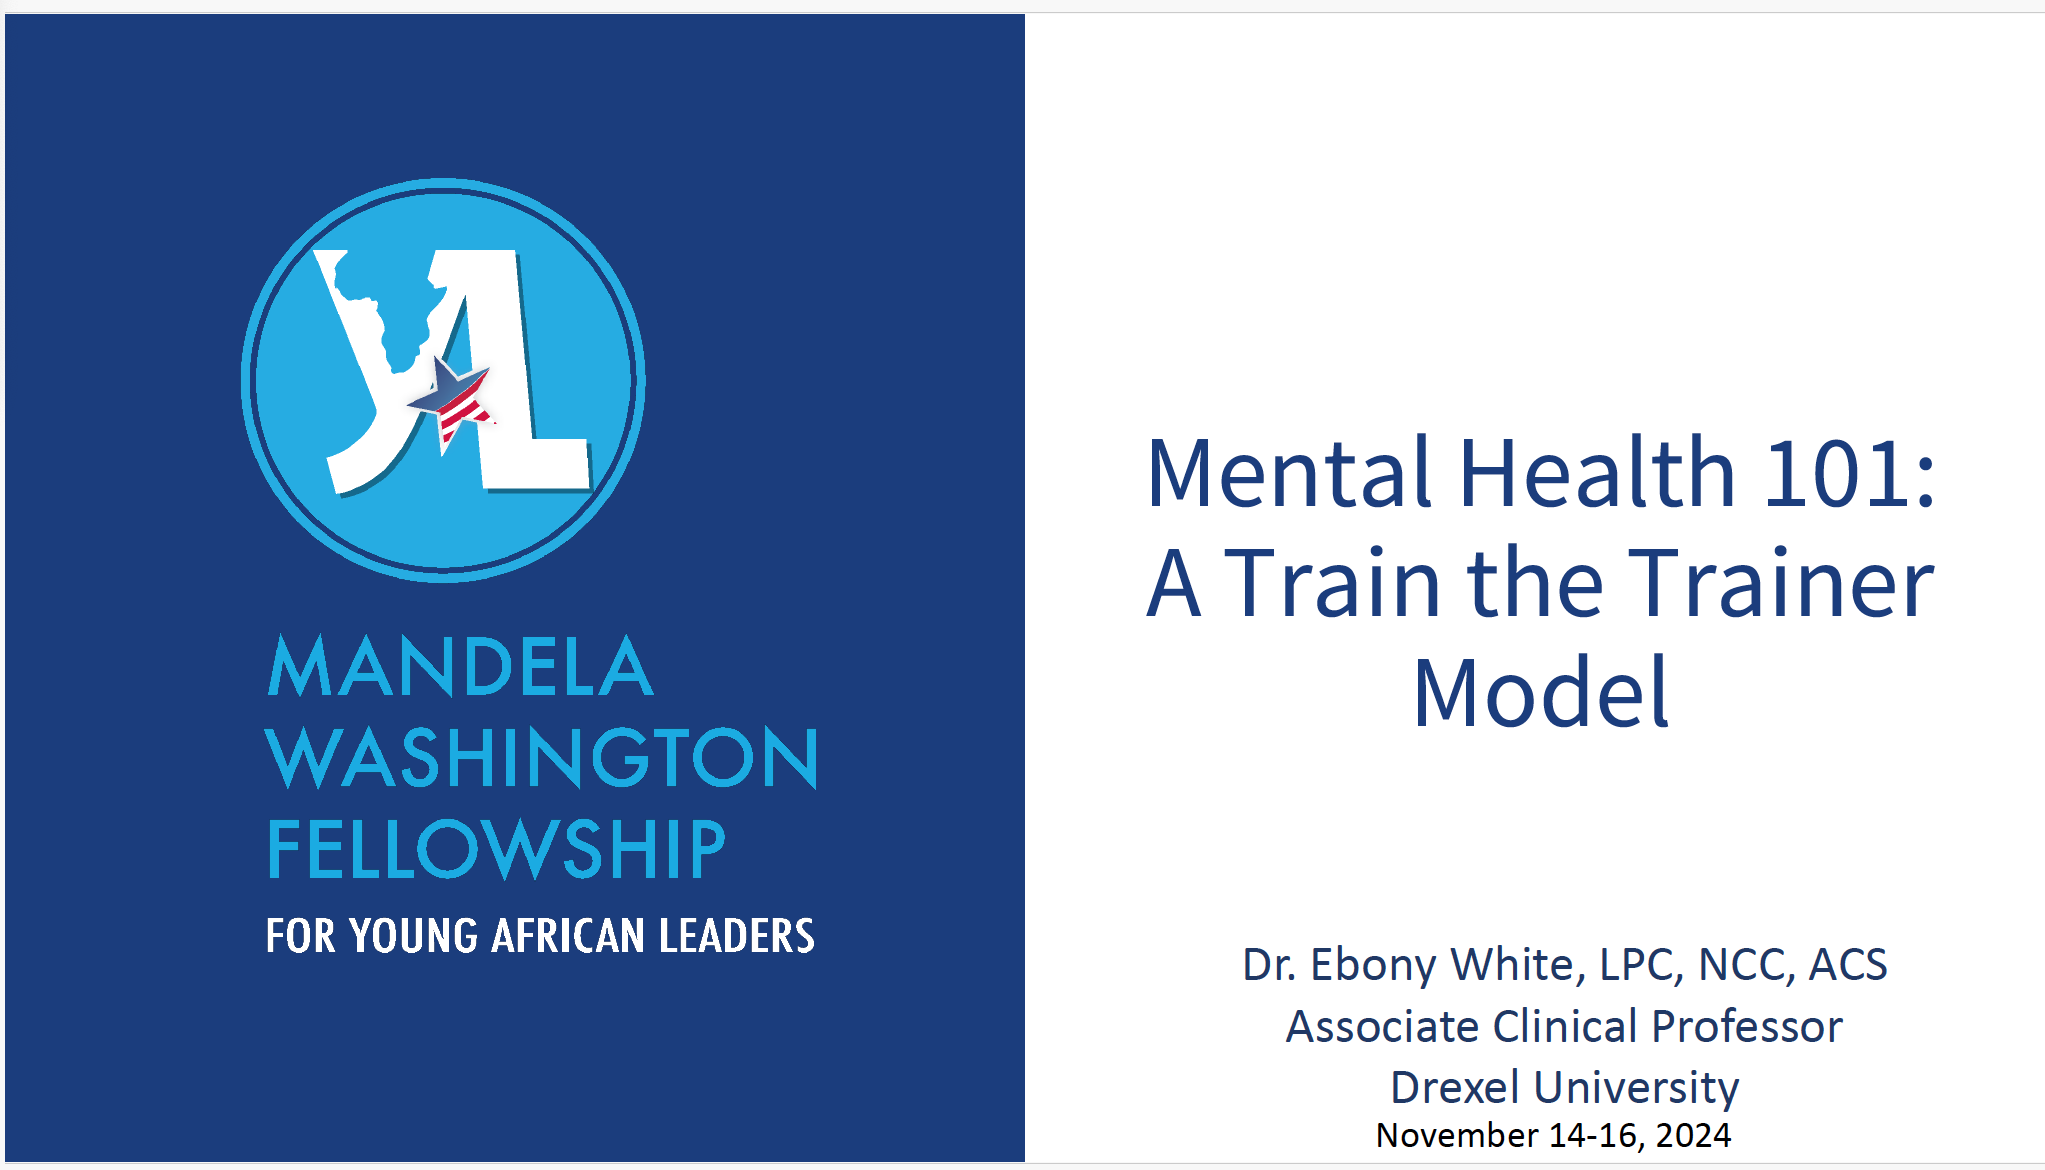 Mental Health 101: A train the trainer model